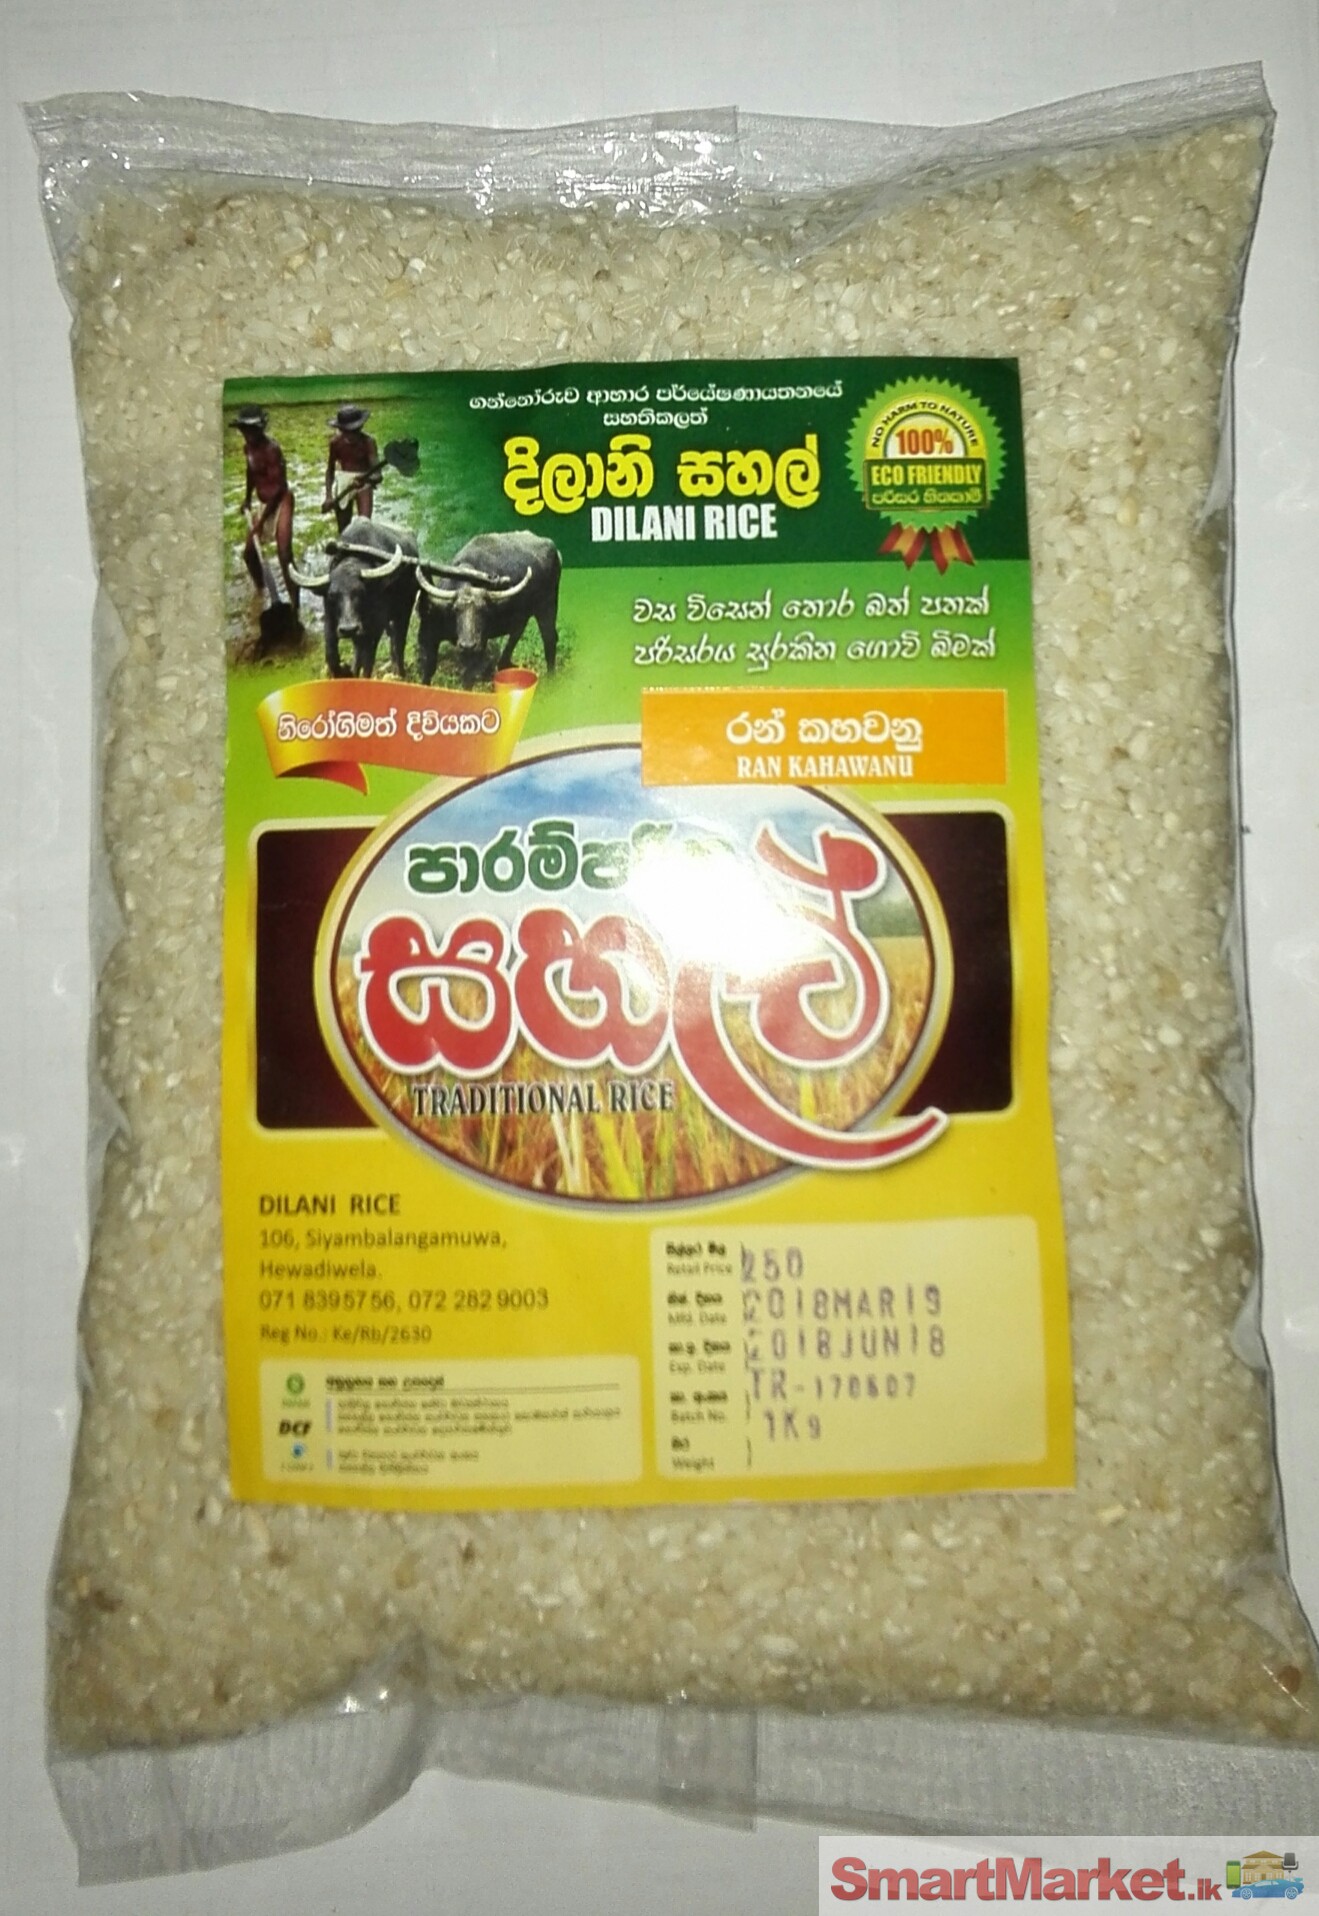 Dilani Rice-Traditional Rice